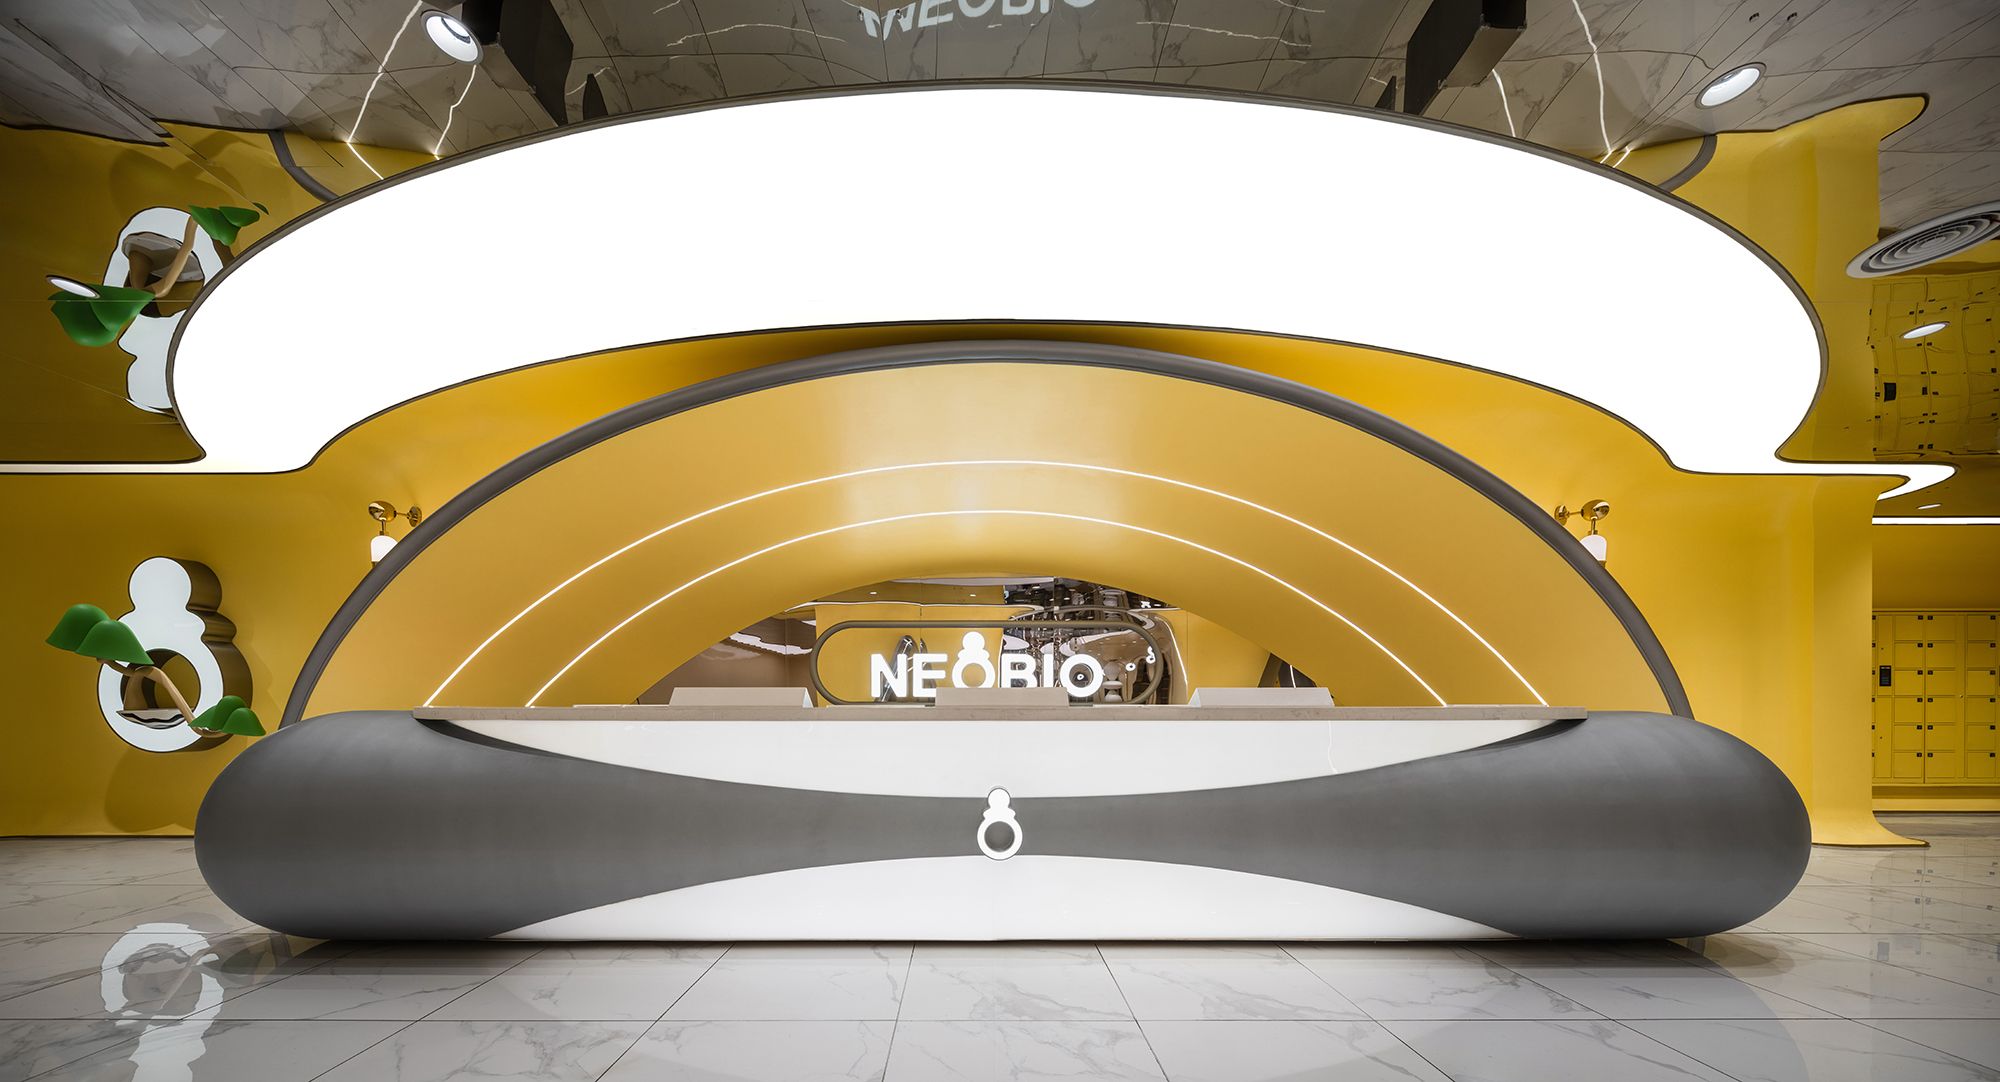 NEOBIO豫园|ART-Arrakis | 建筑室内设计的创新与灵感